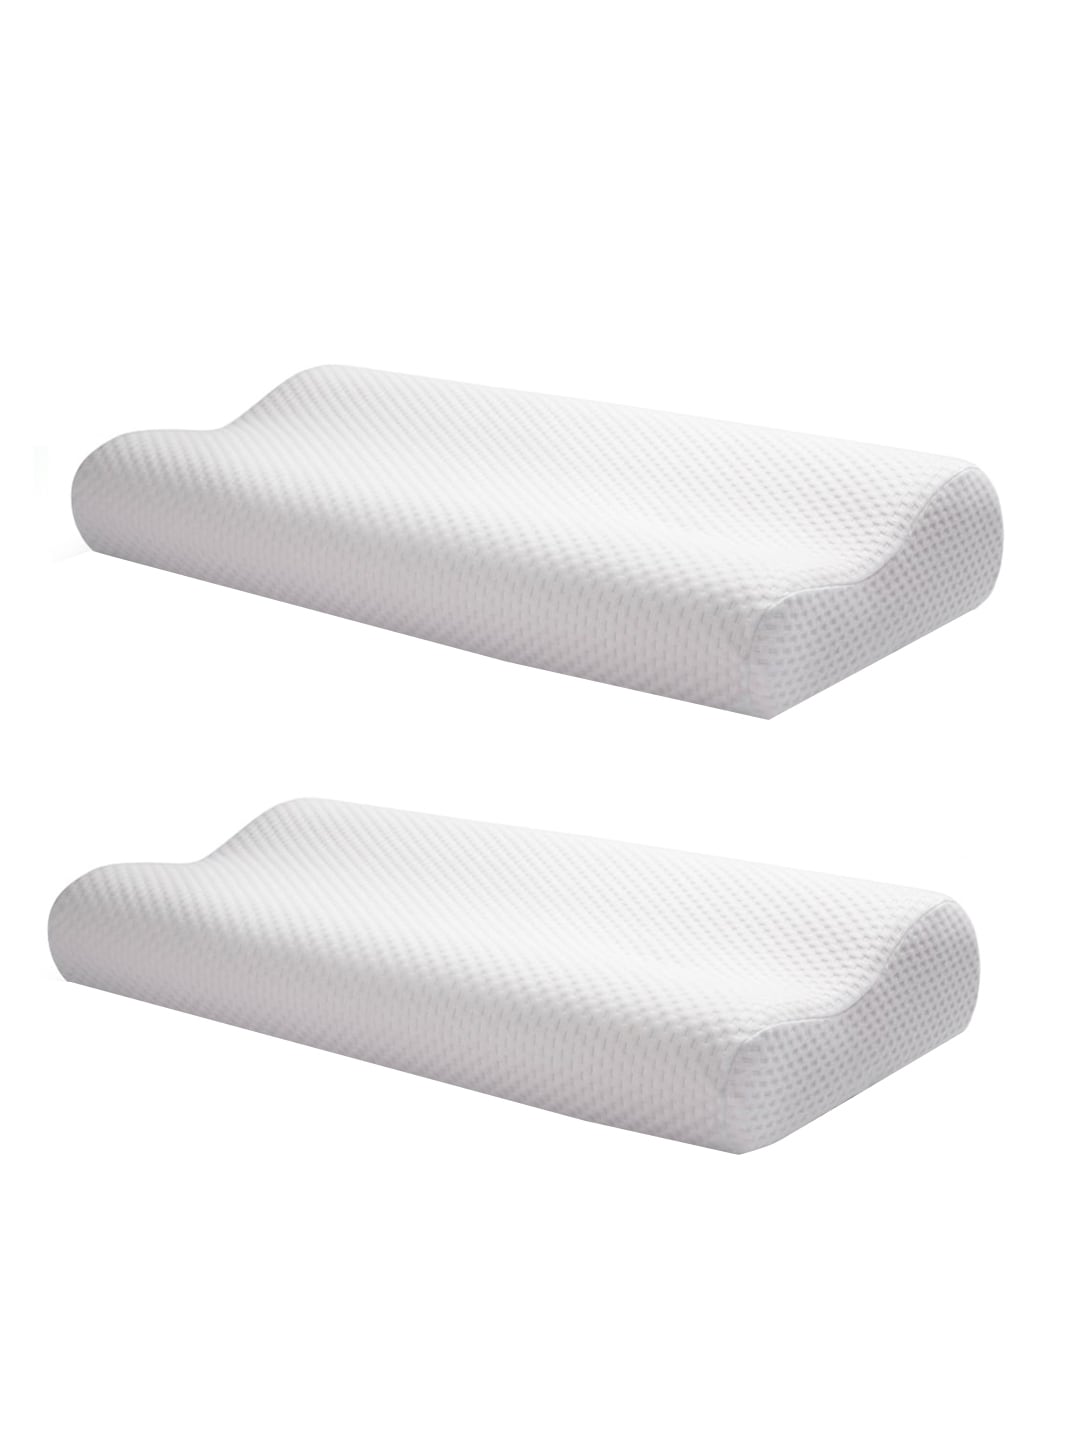 AVI Set Of 2 White Orthopaedic Cervial Contour Memory Foam Pillow Price in India